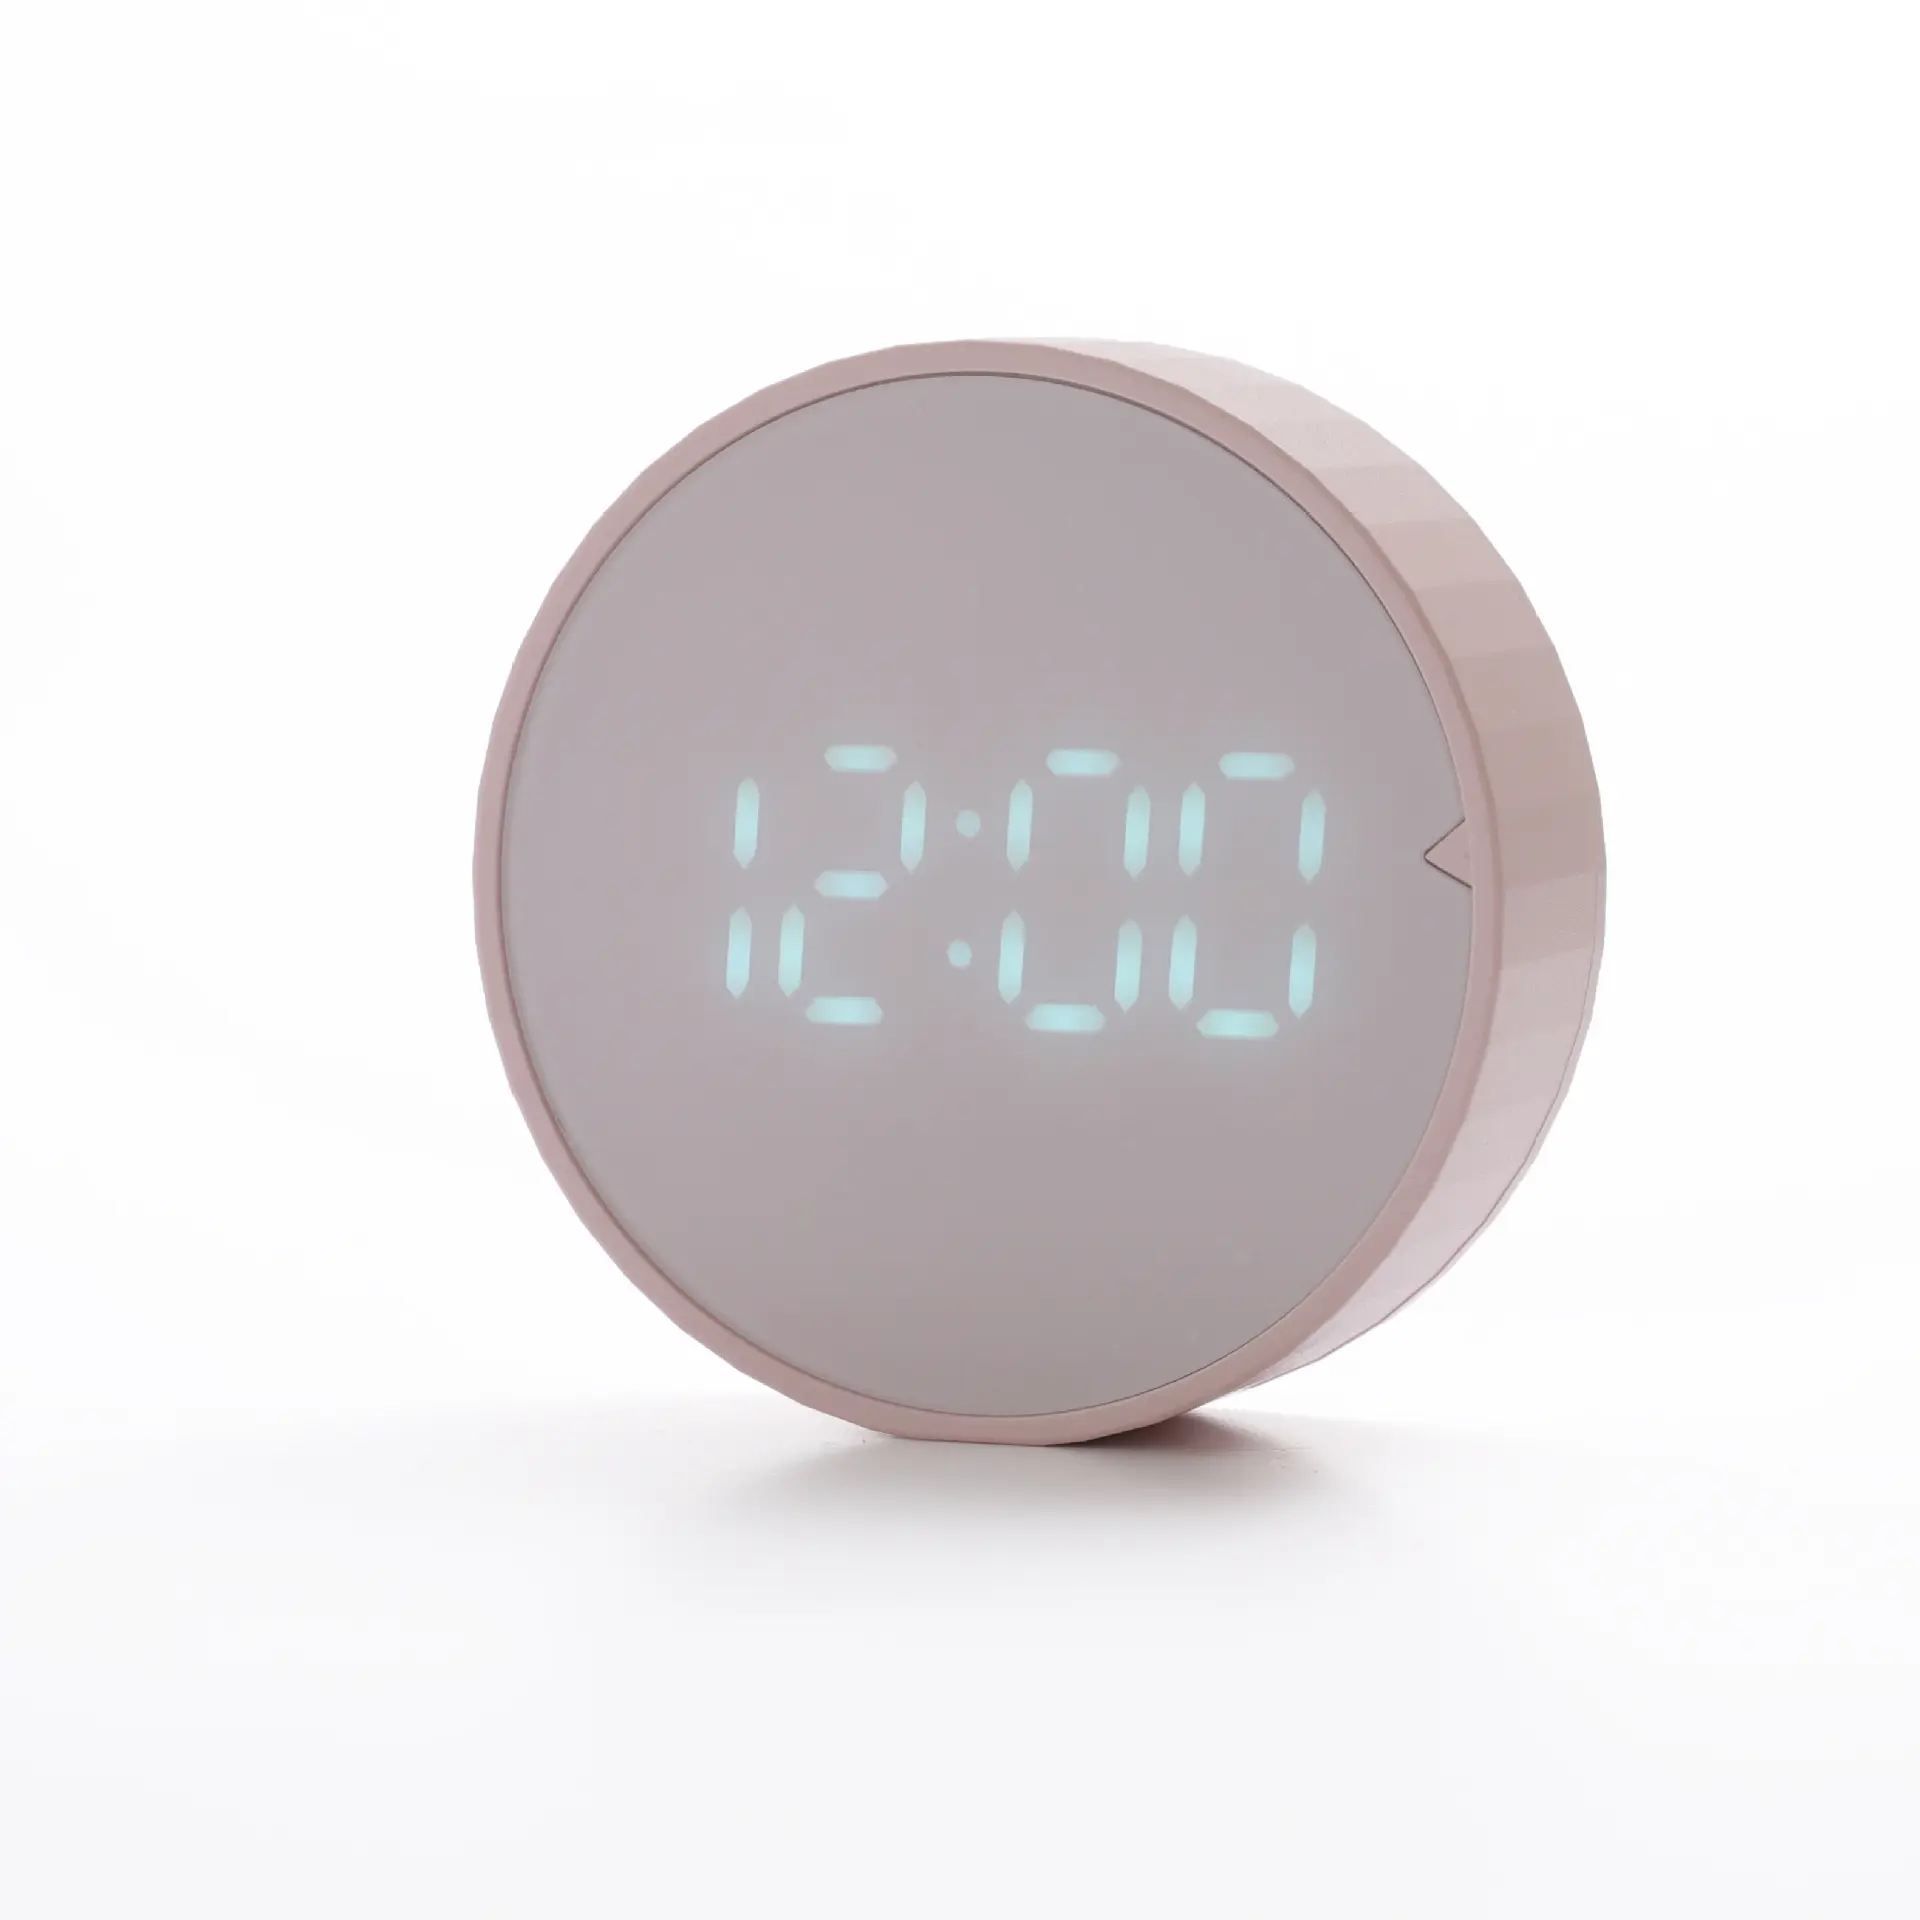 2021 new C2 round heart meter countdown intelligent alarm clock timing magnetic clock large digital clock